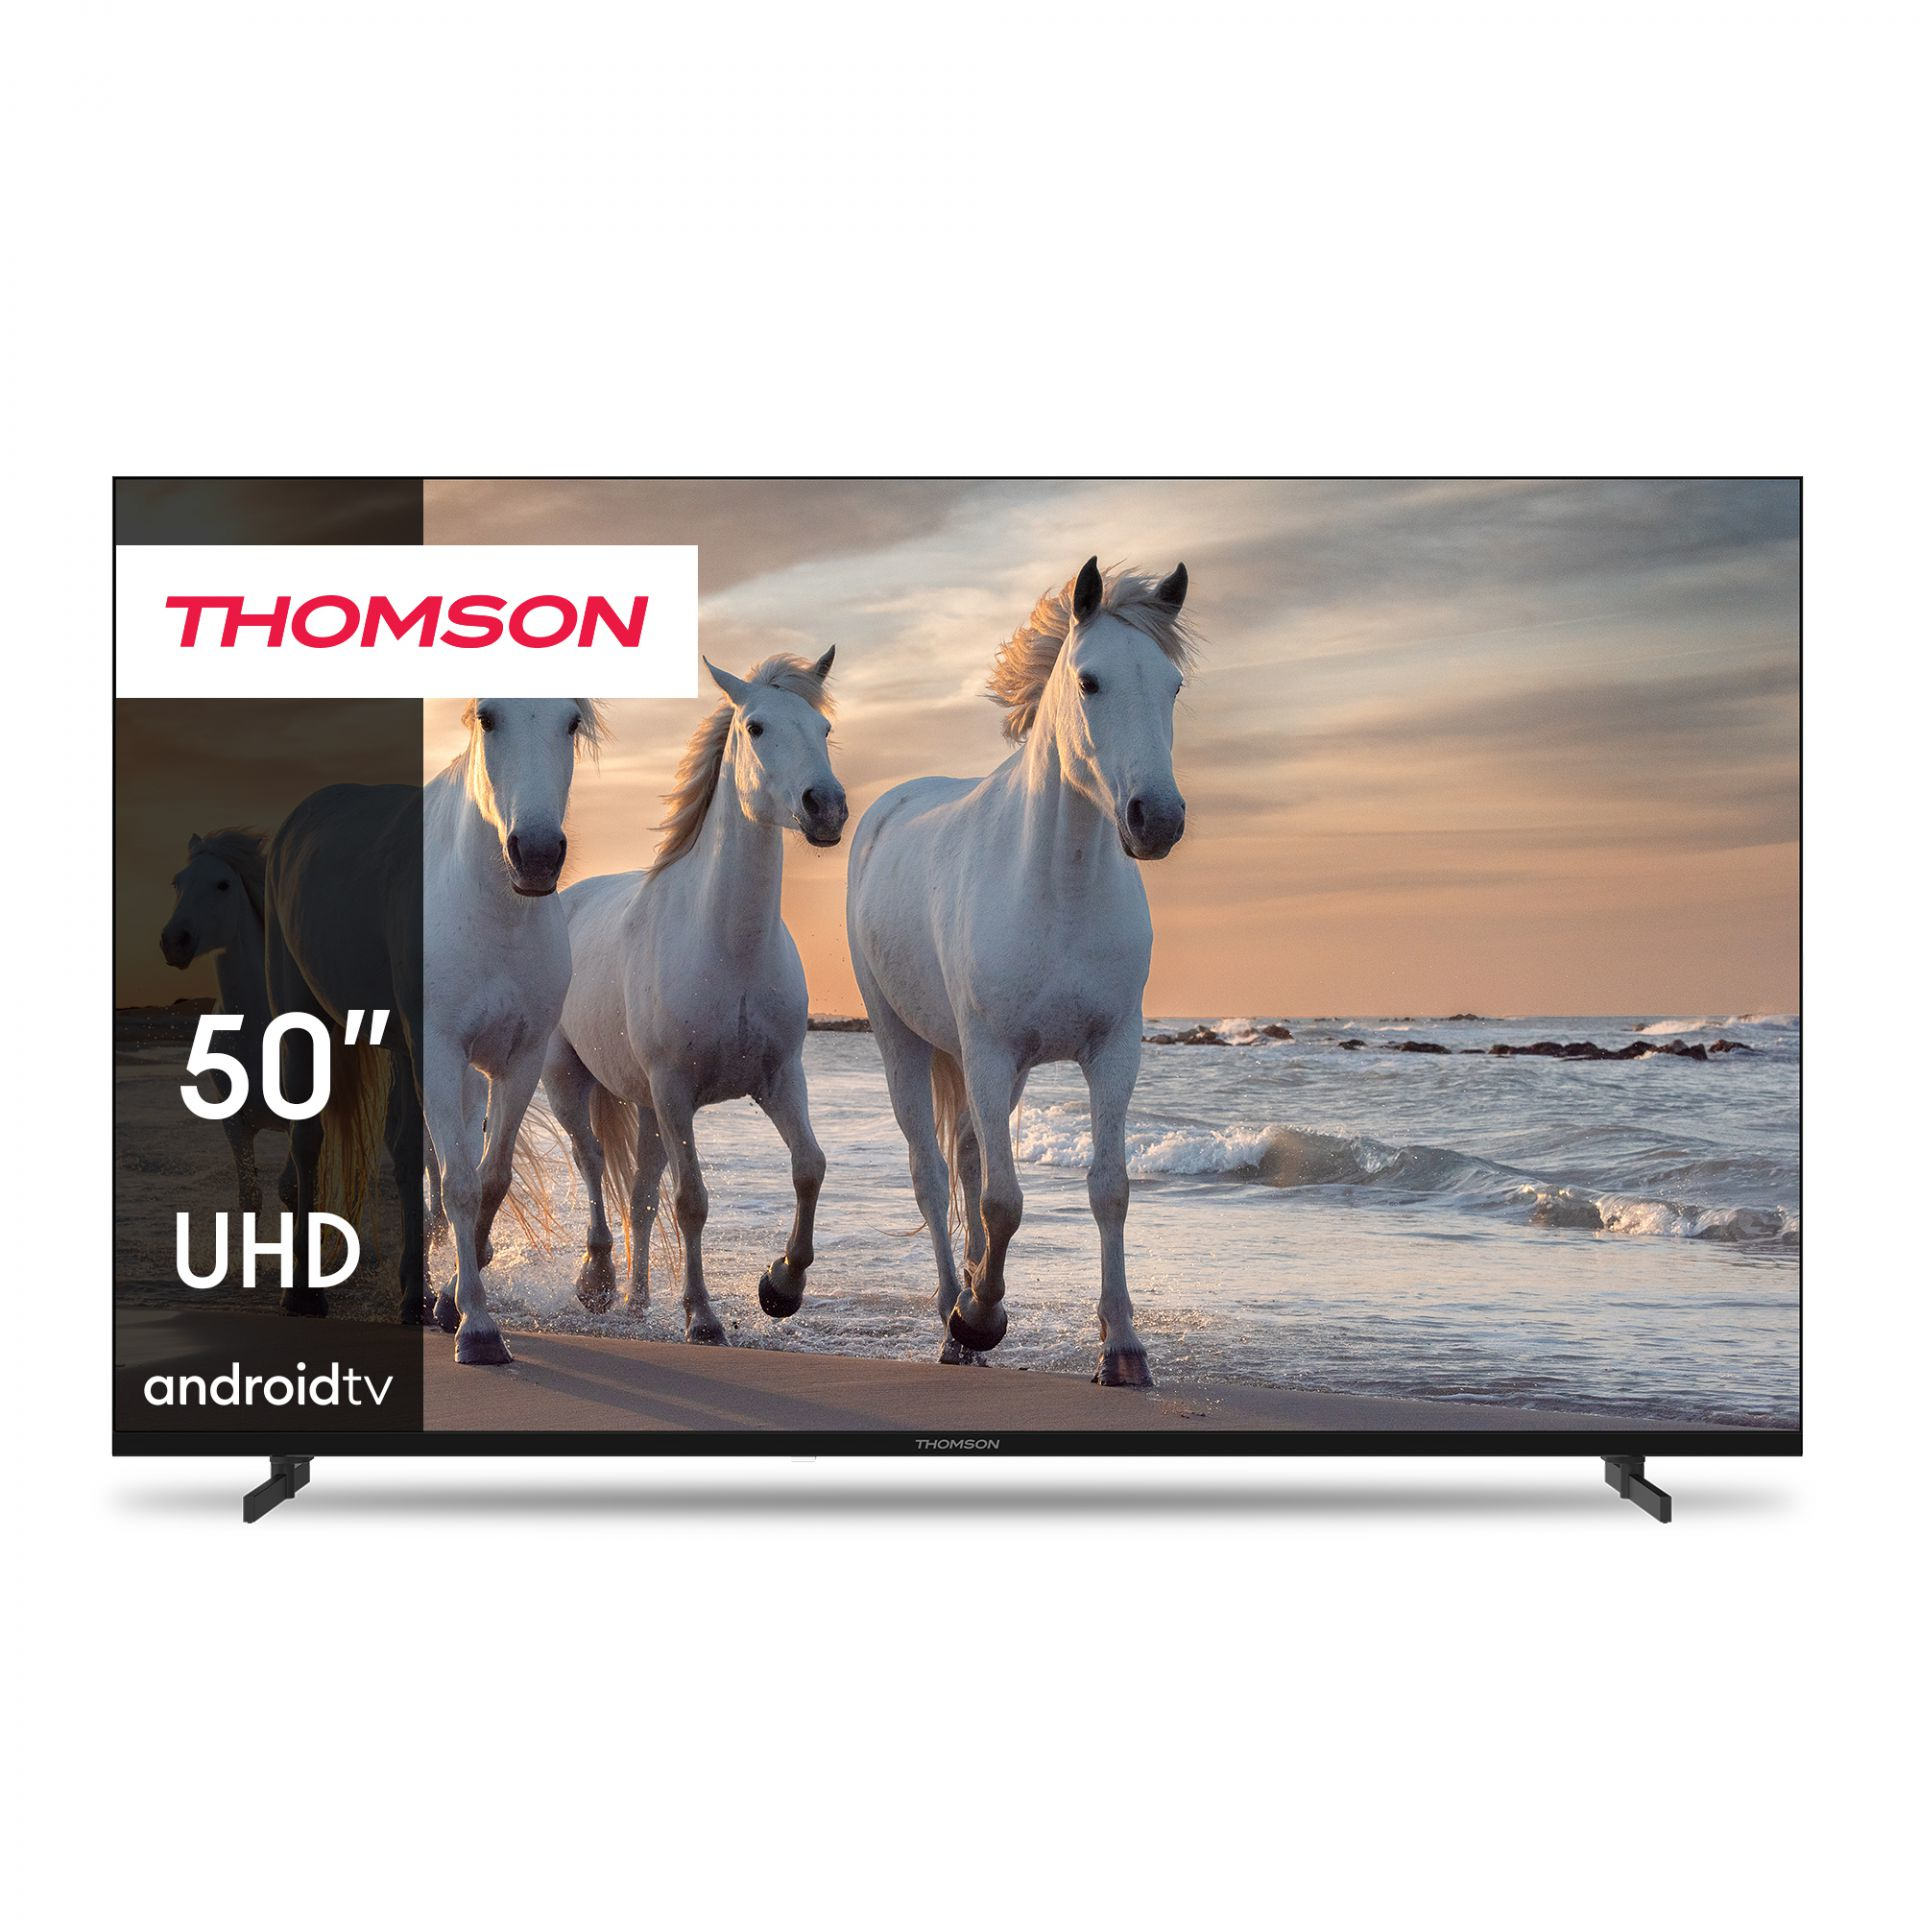 Thomson 50UA5S13 TV